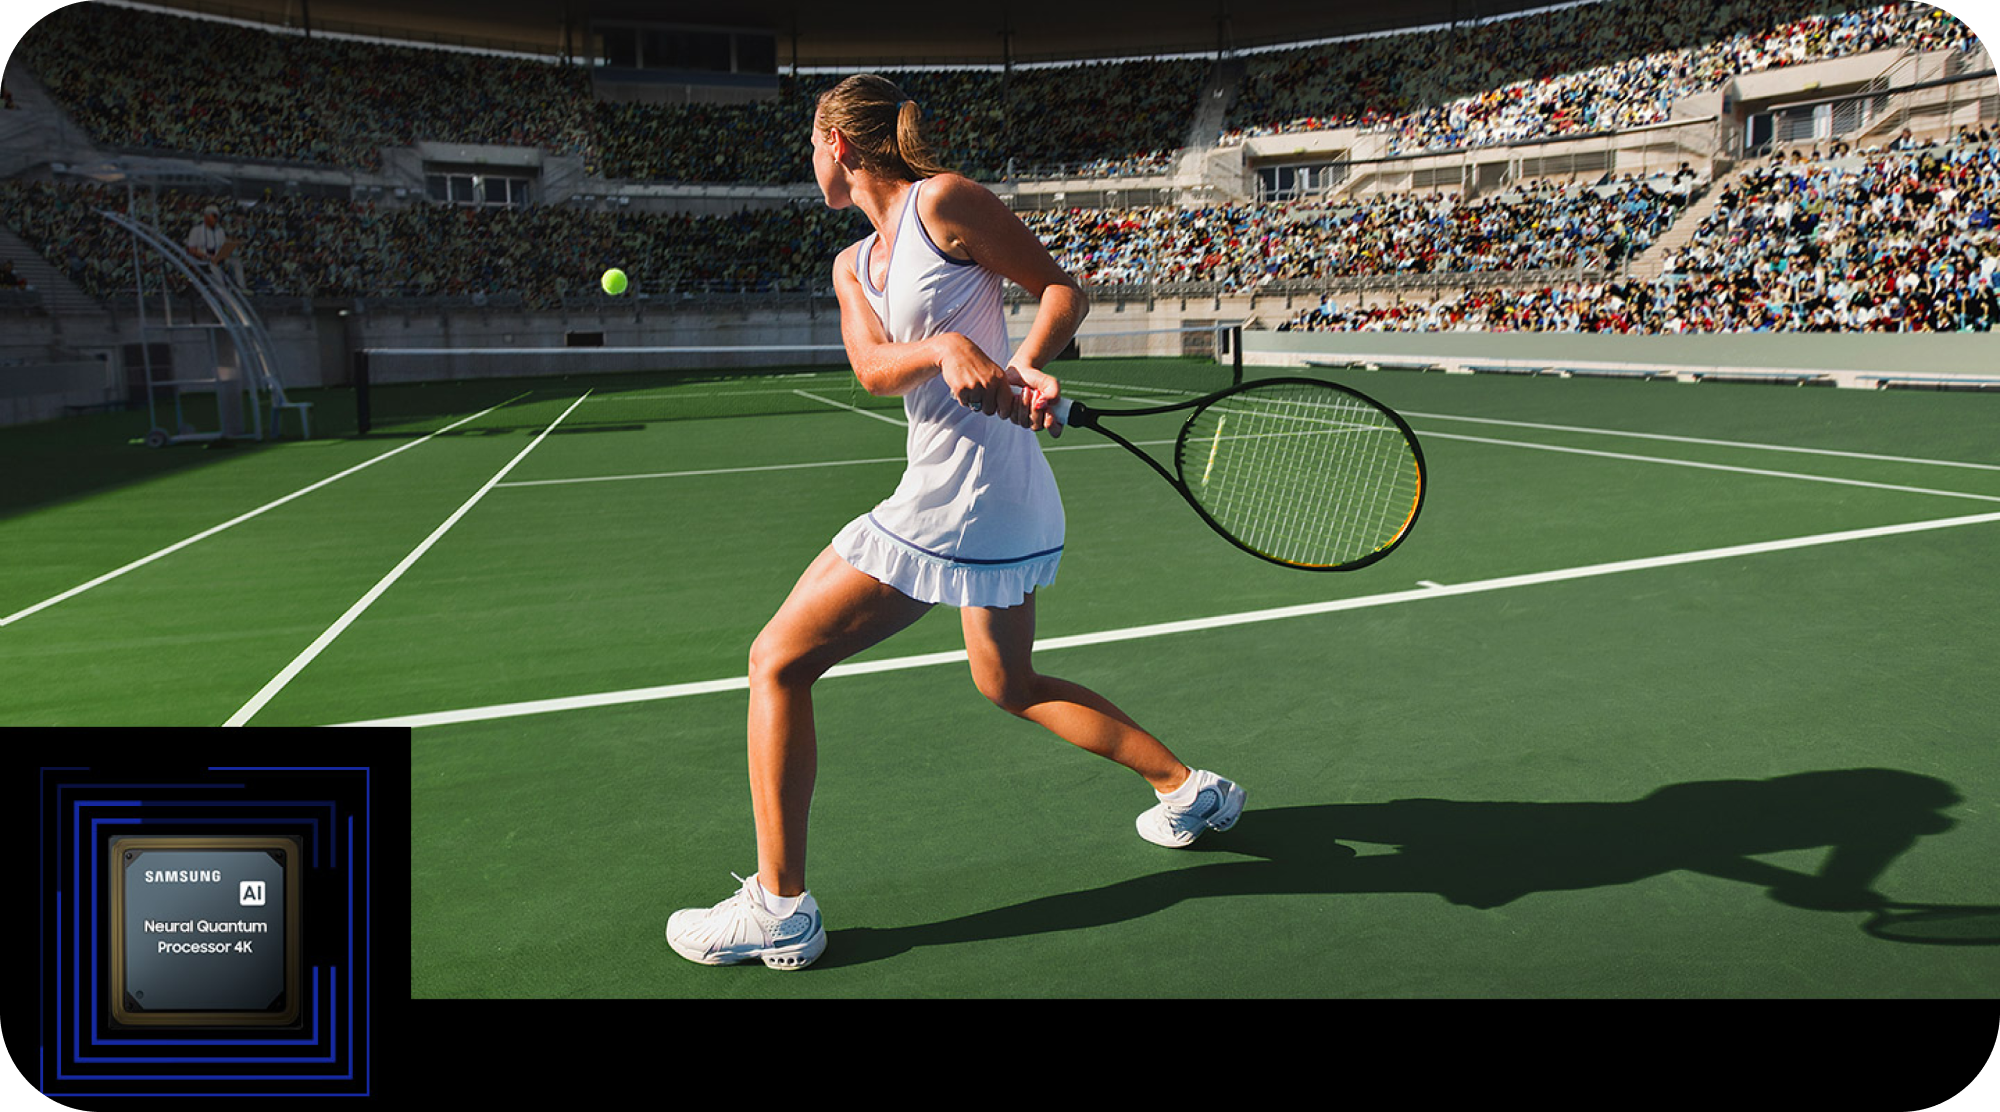 Samsung TV med Neural Quantum Processor 4K og en jente som spiller tennis